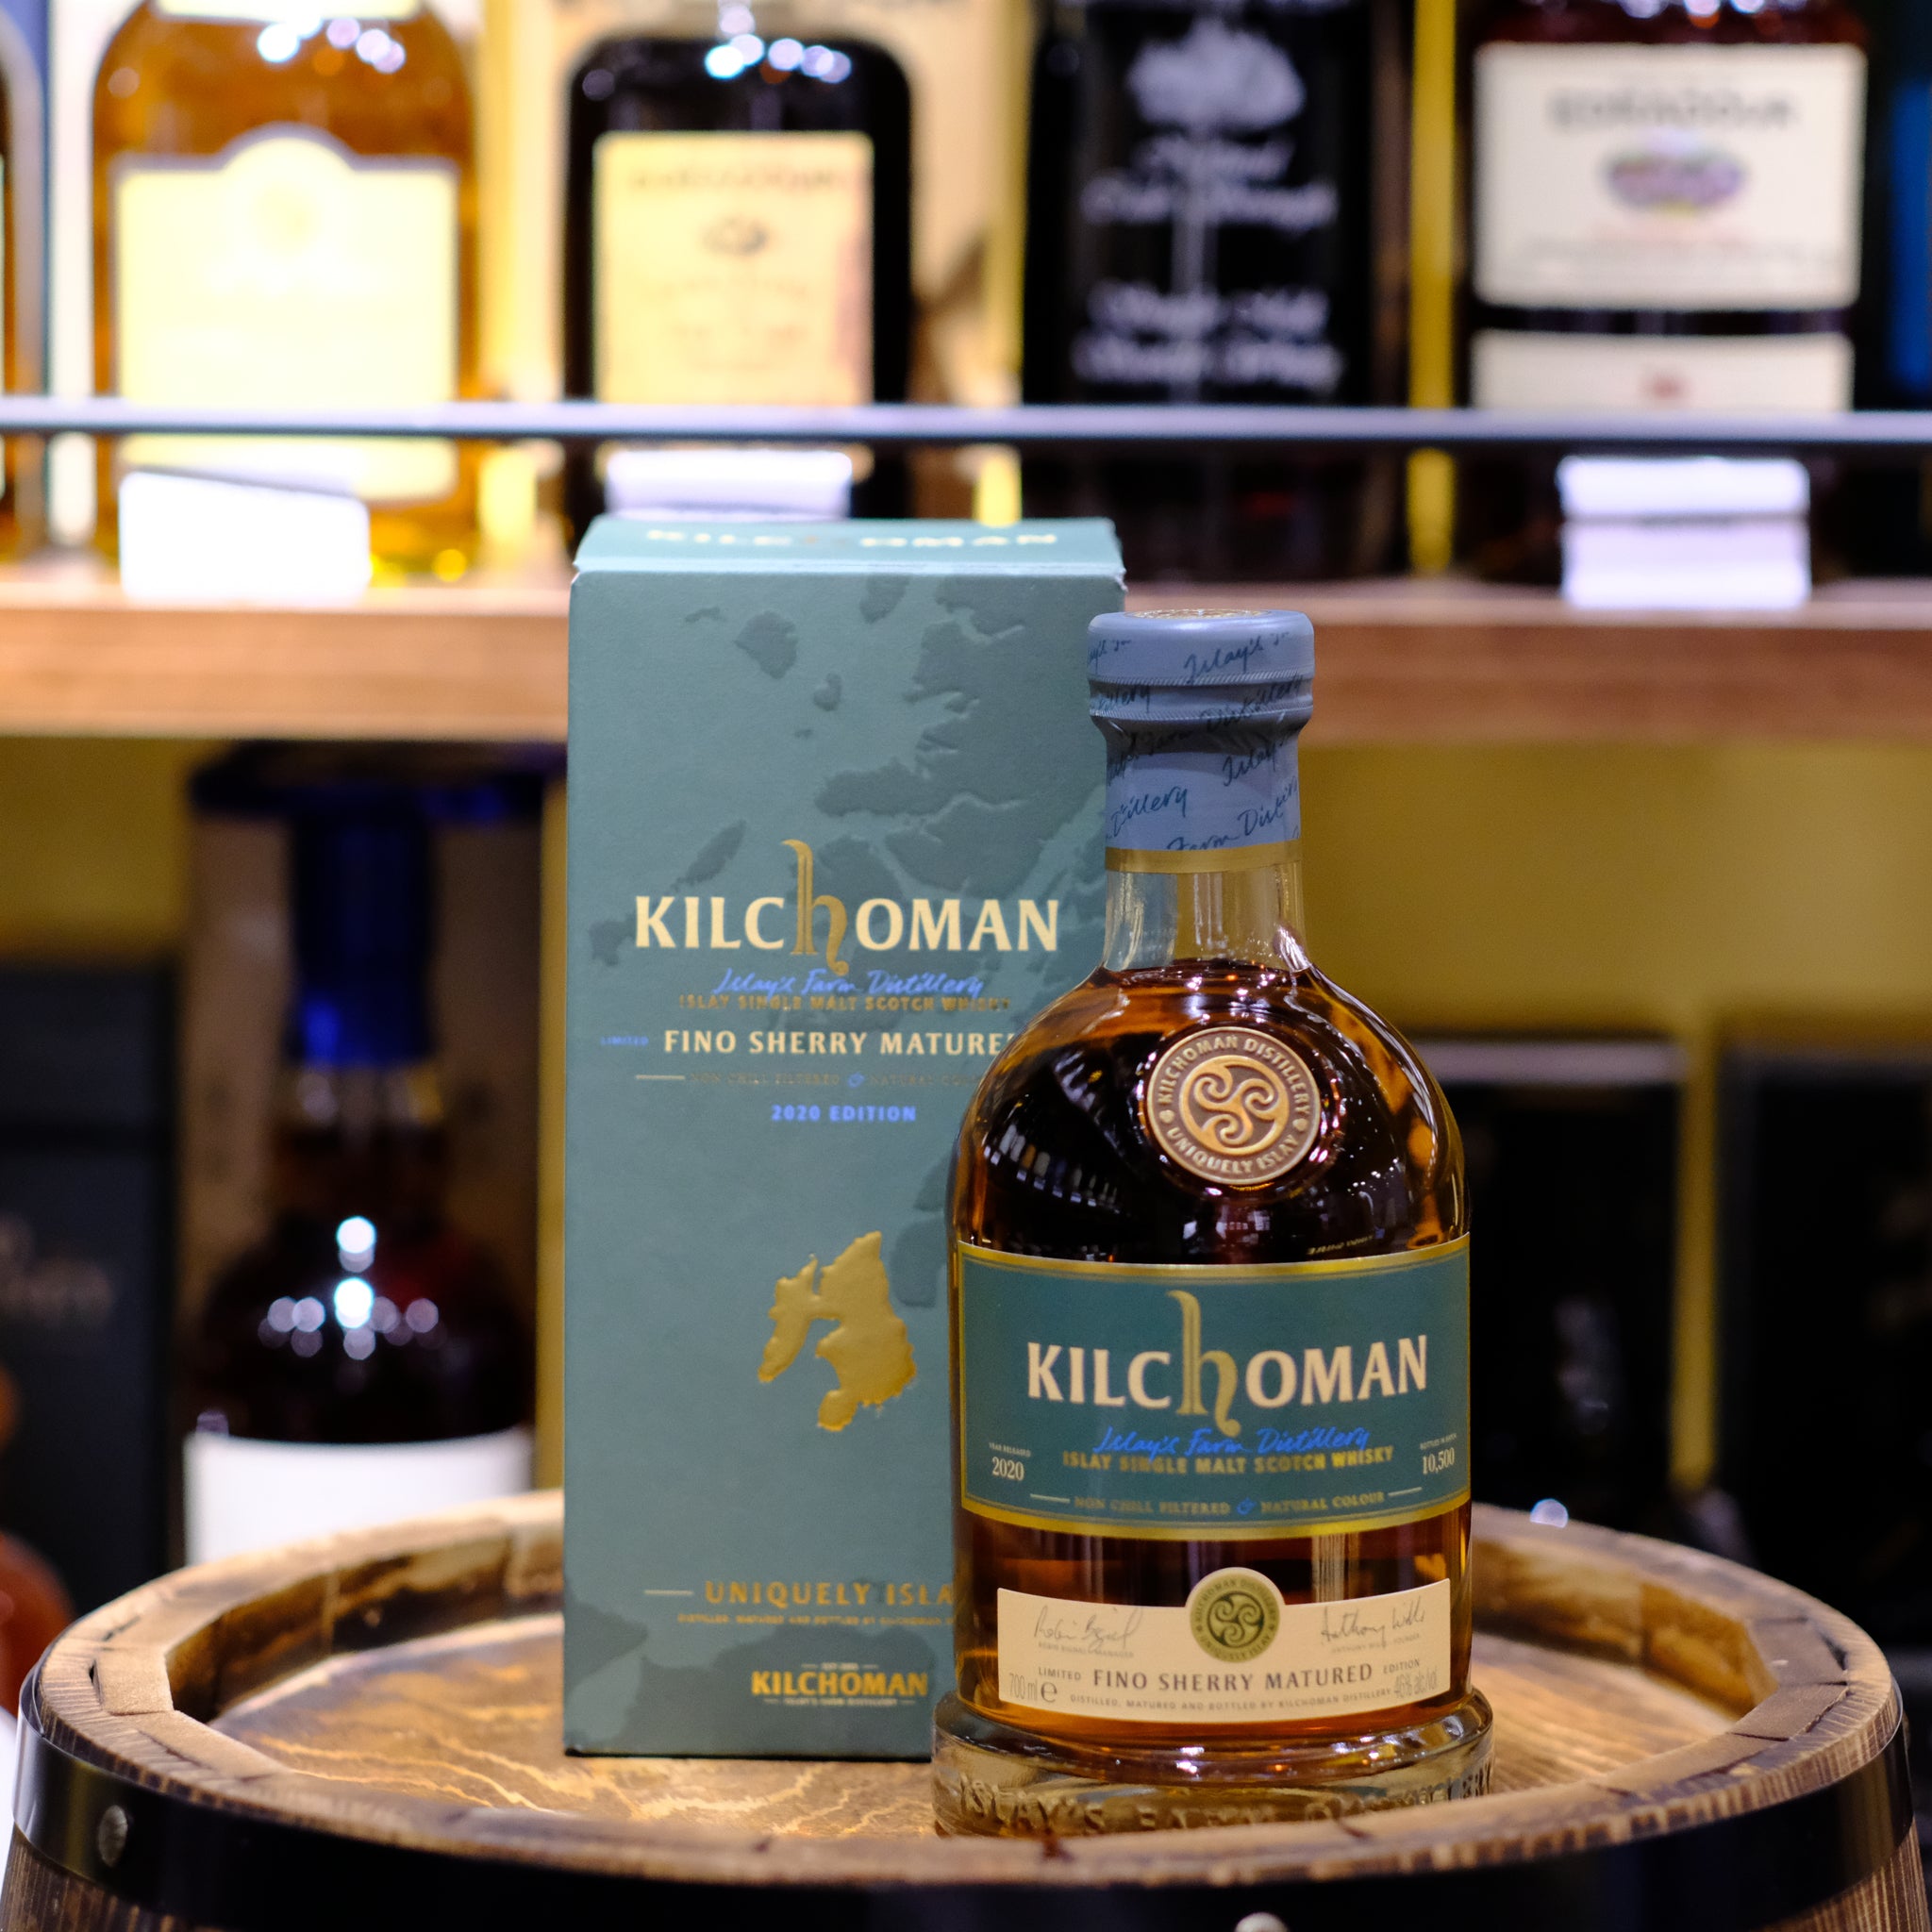 Kilchoman Fino Sherry Matured Single Malt Scotch Whisky (2020 Release)